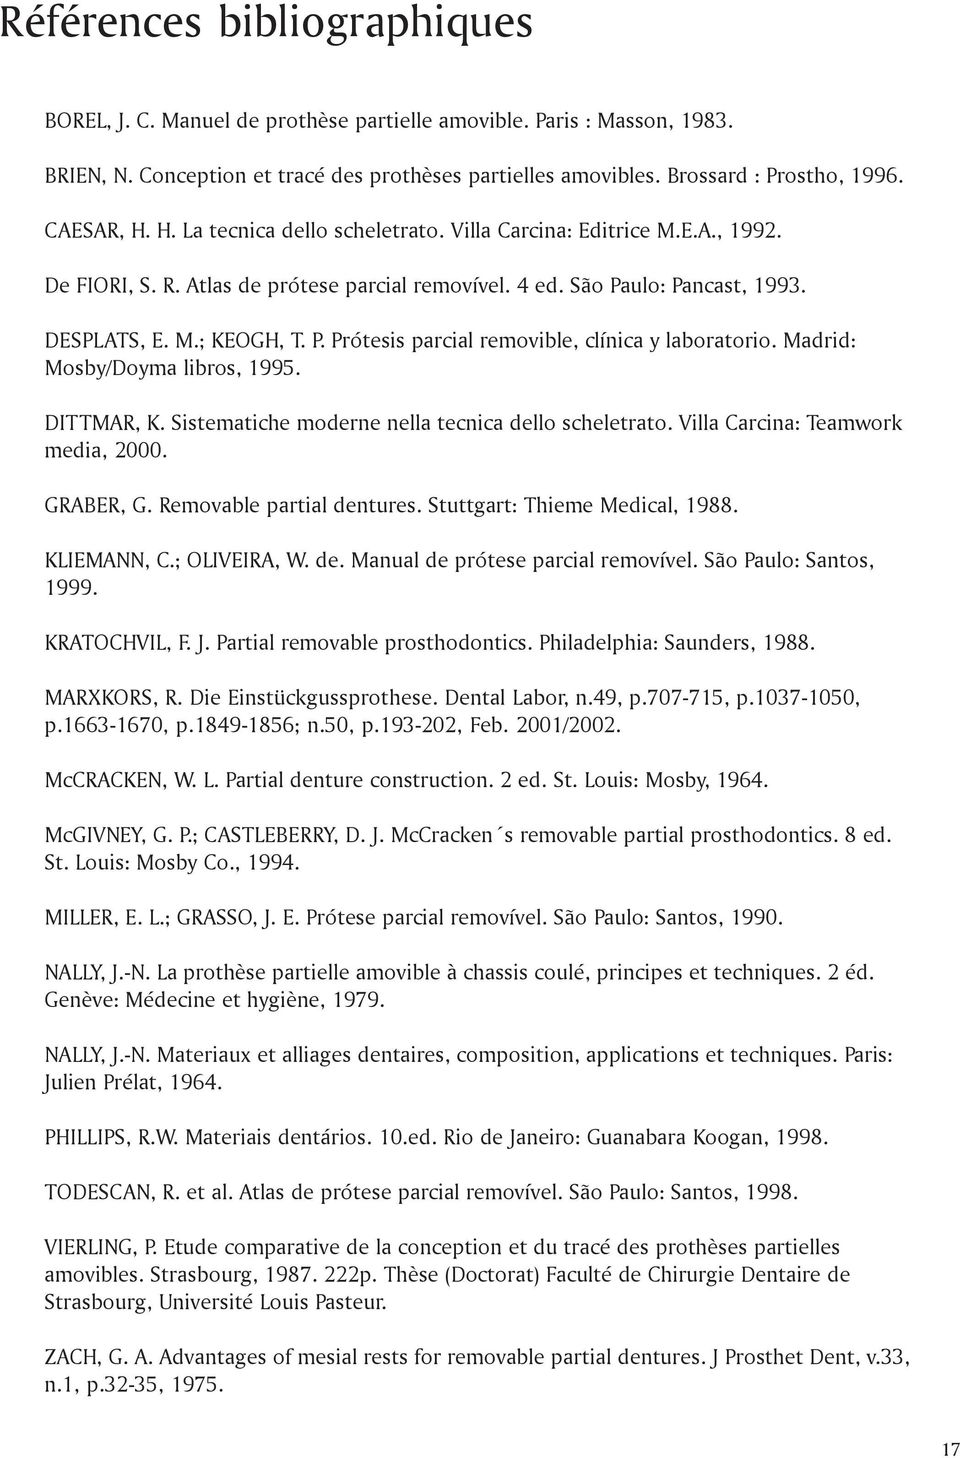 Madrid: Mosby/Doyma libros, 1995. DITTMAR, K. Sistematiche moderne nella tecnica dello scheletrato. Villa Carcina: Teamwork media, 2000. GRABER, G. Removable partial dentures.